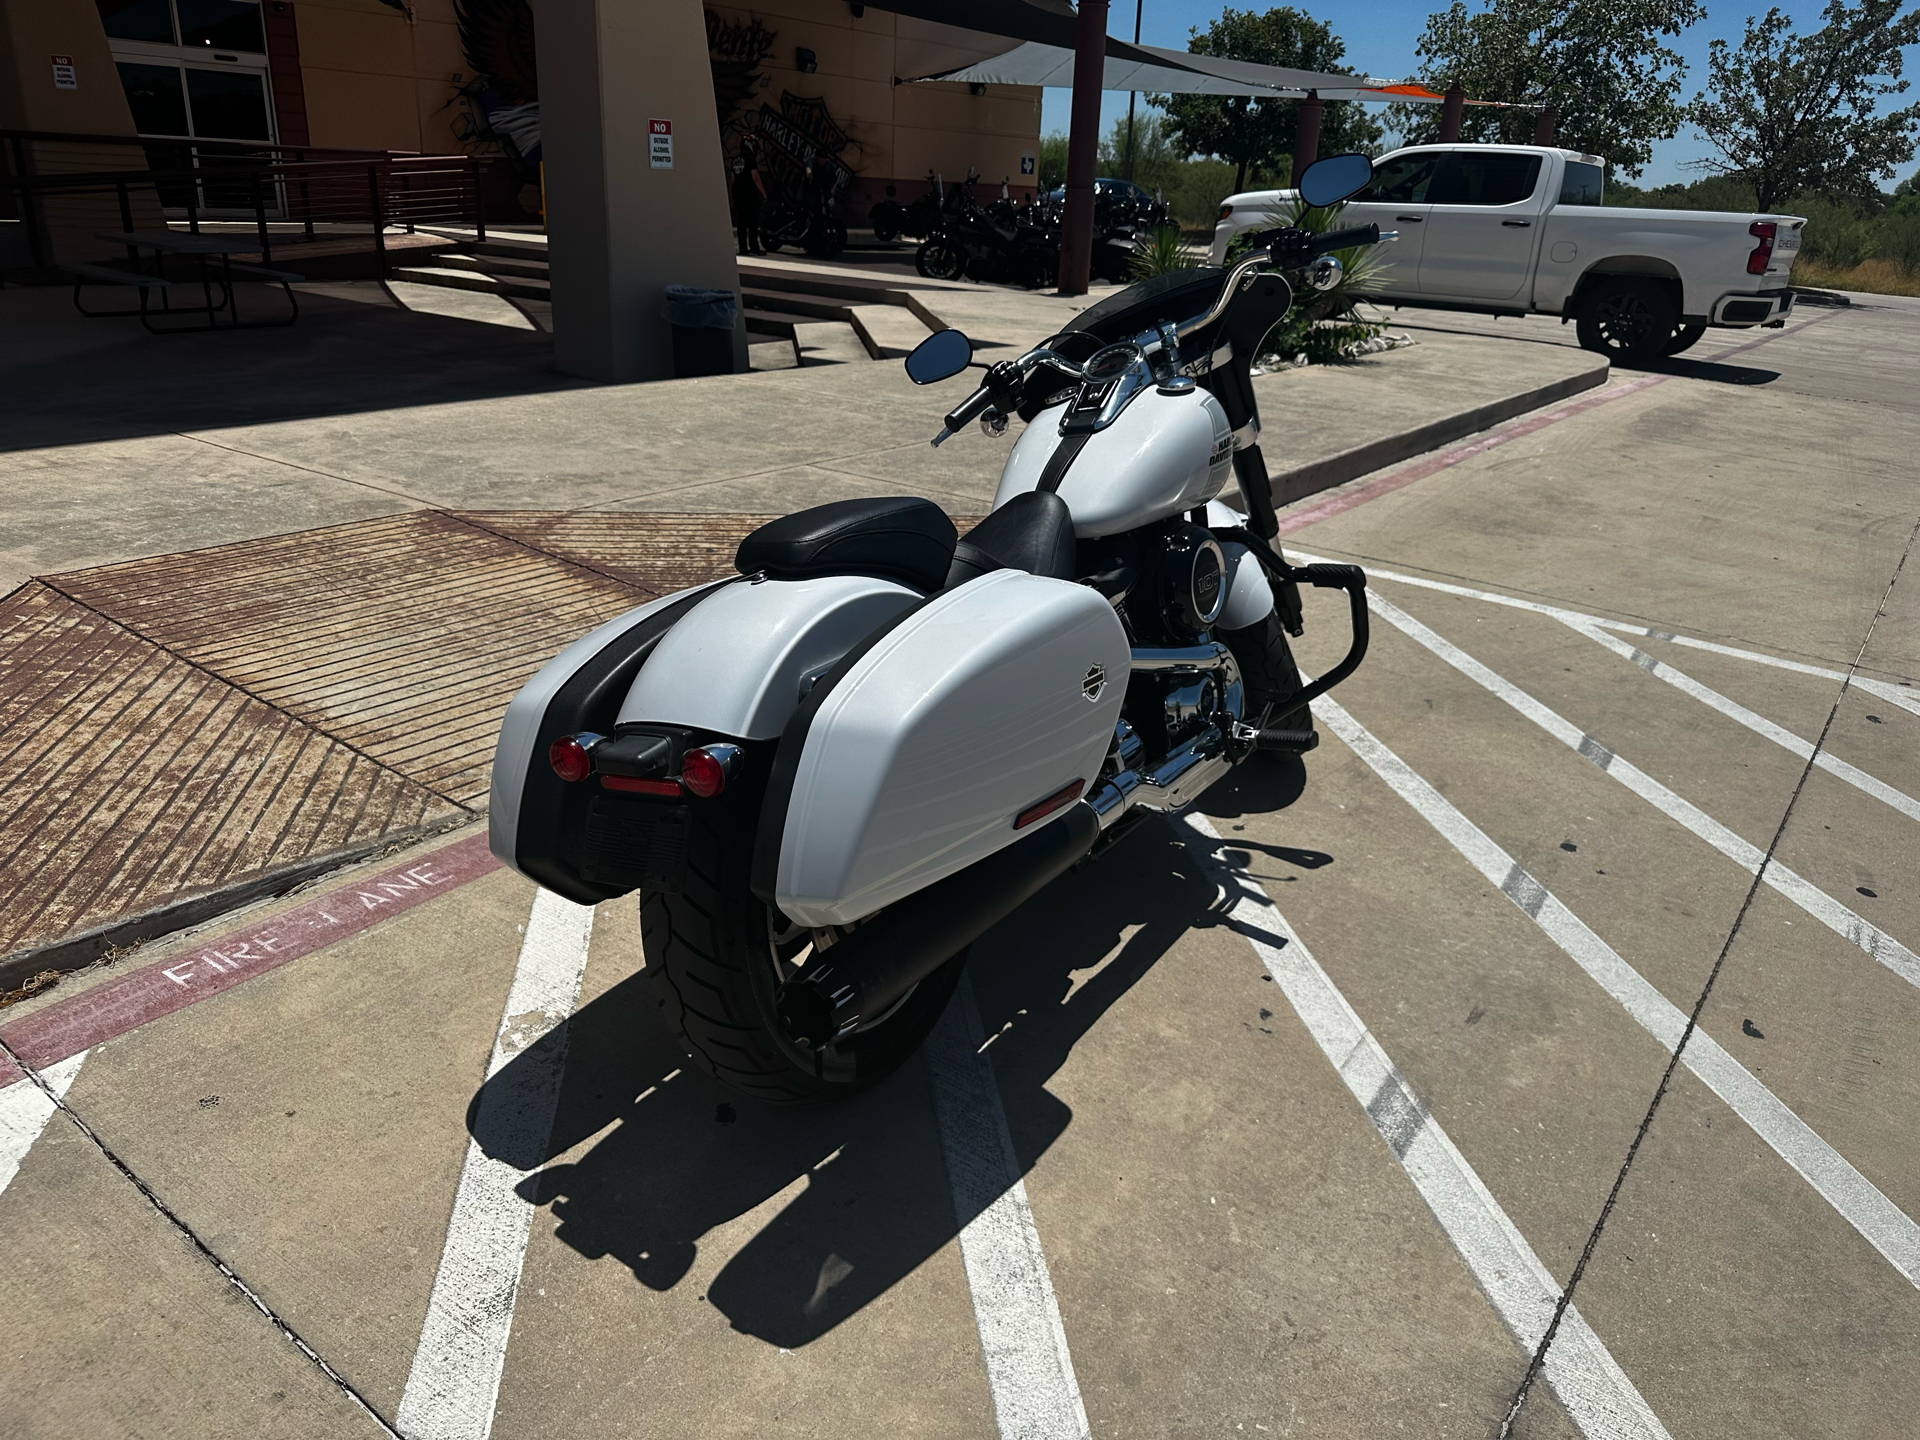 2021 Harley-Davidson Sport Glide® in San Antonio, Texas - Photo 8